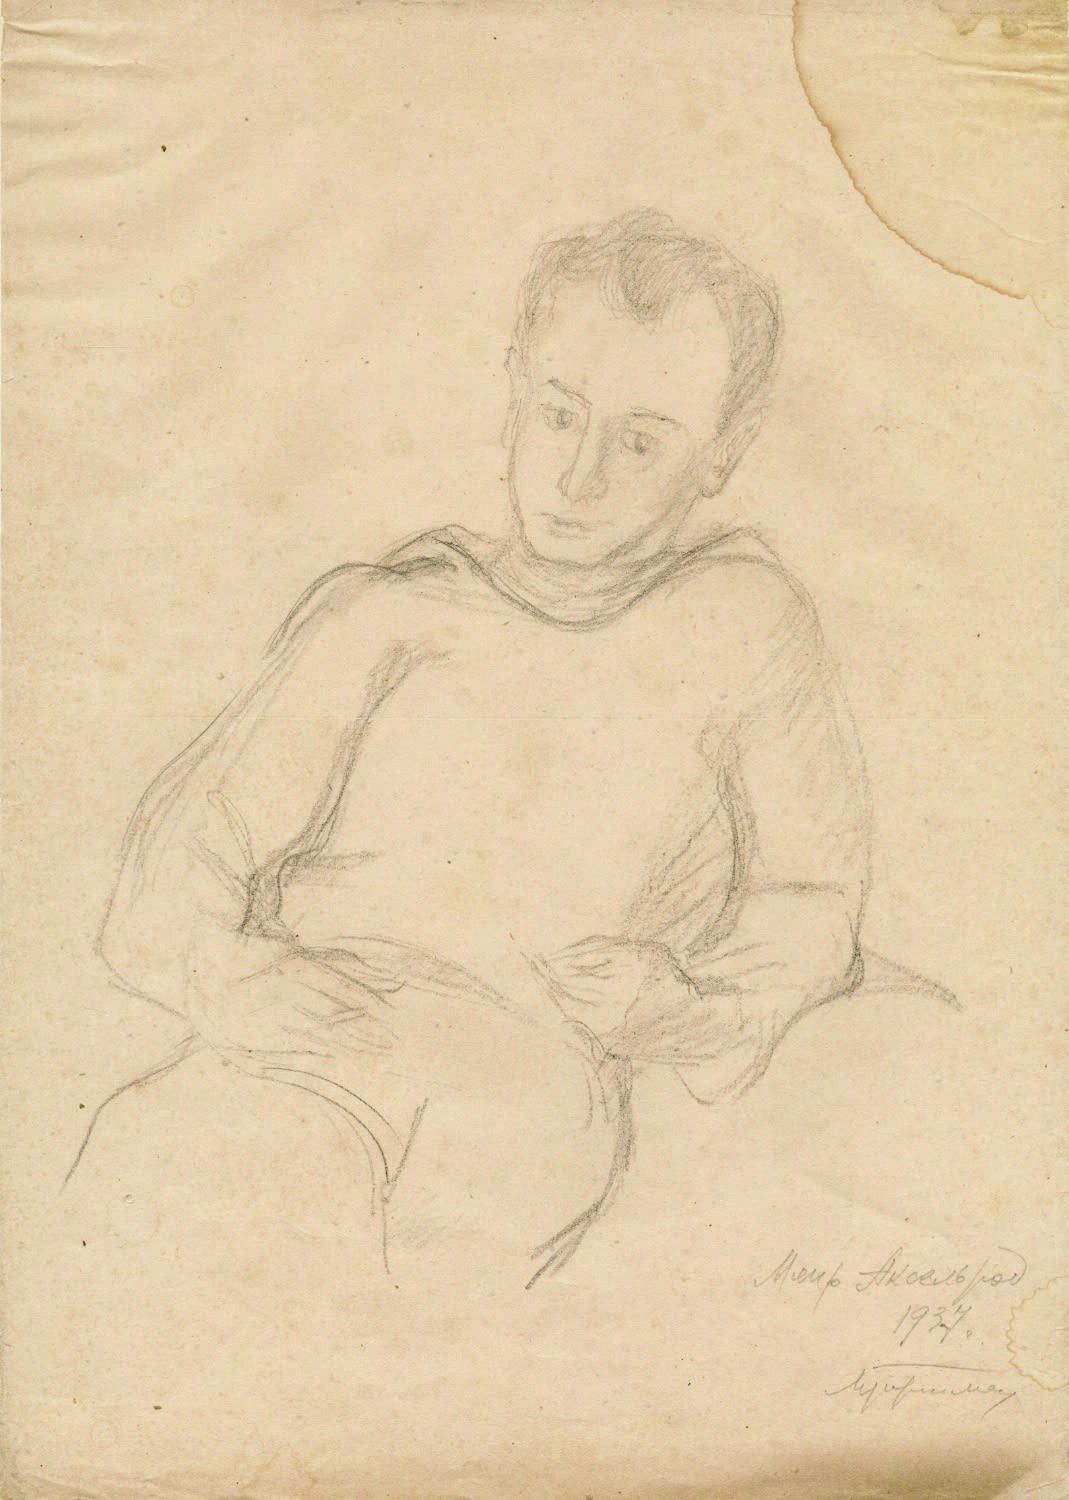 Mendel Gorshman (1902-72). Pencil drawing, 1937. Portrait of  Meir Axelrod, 44x32 cm